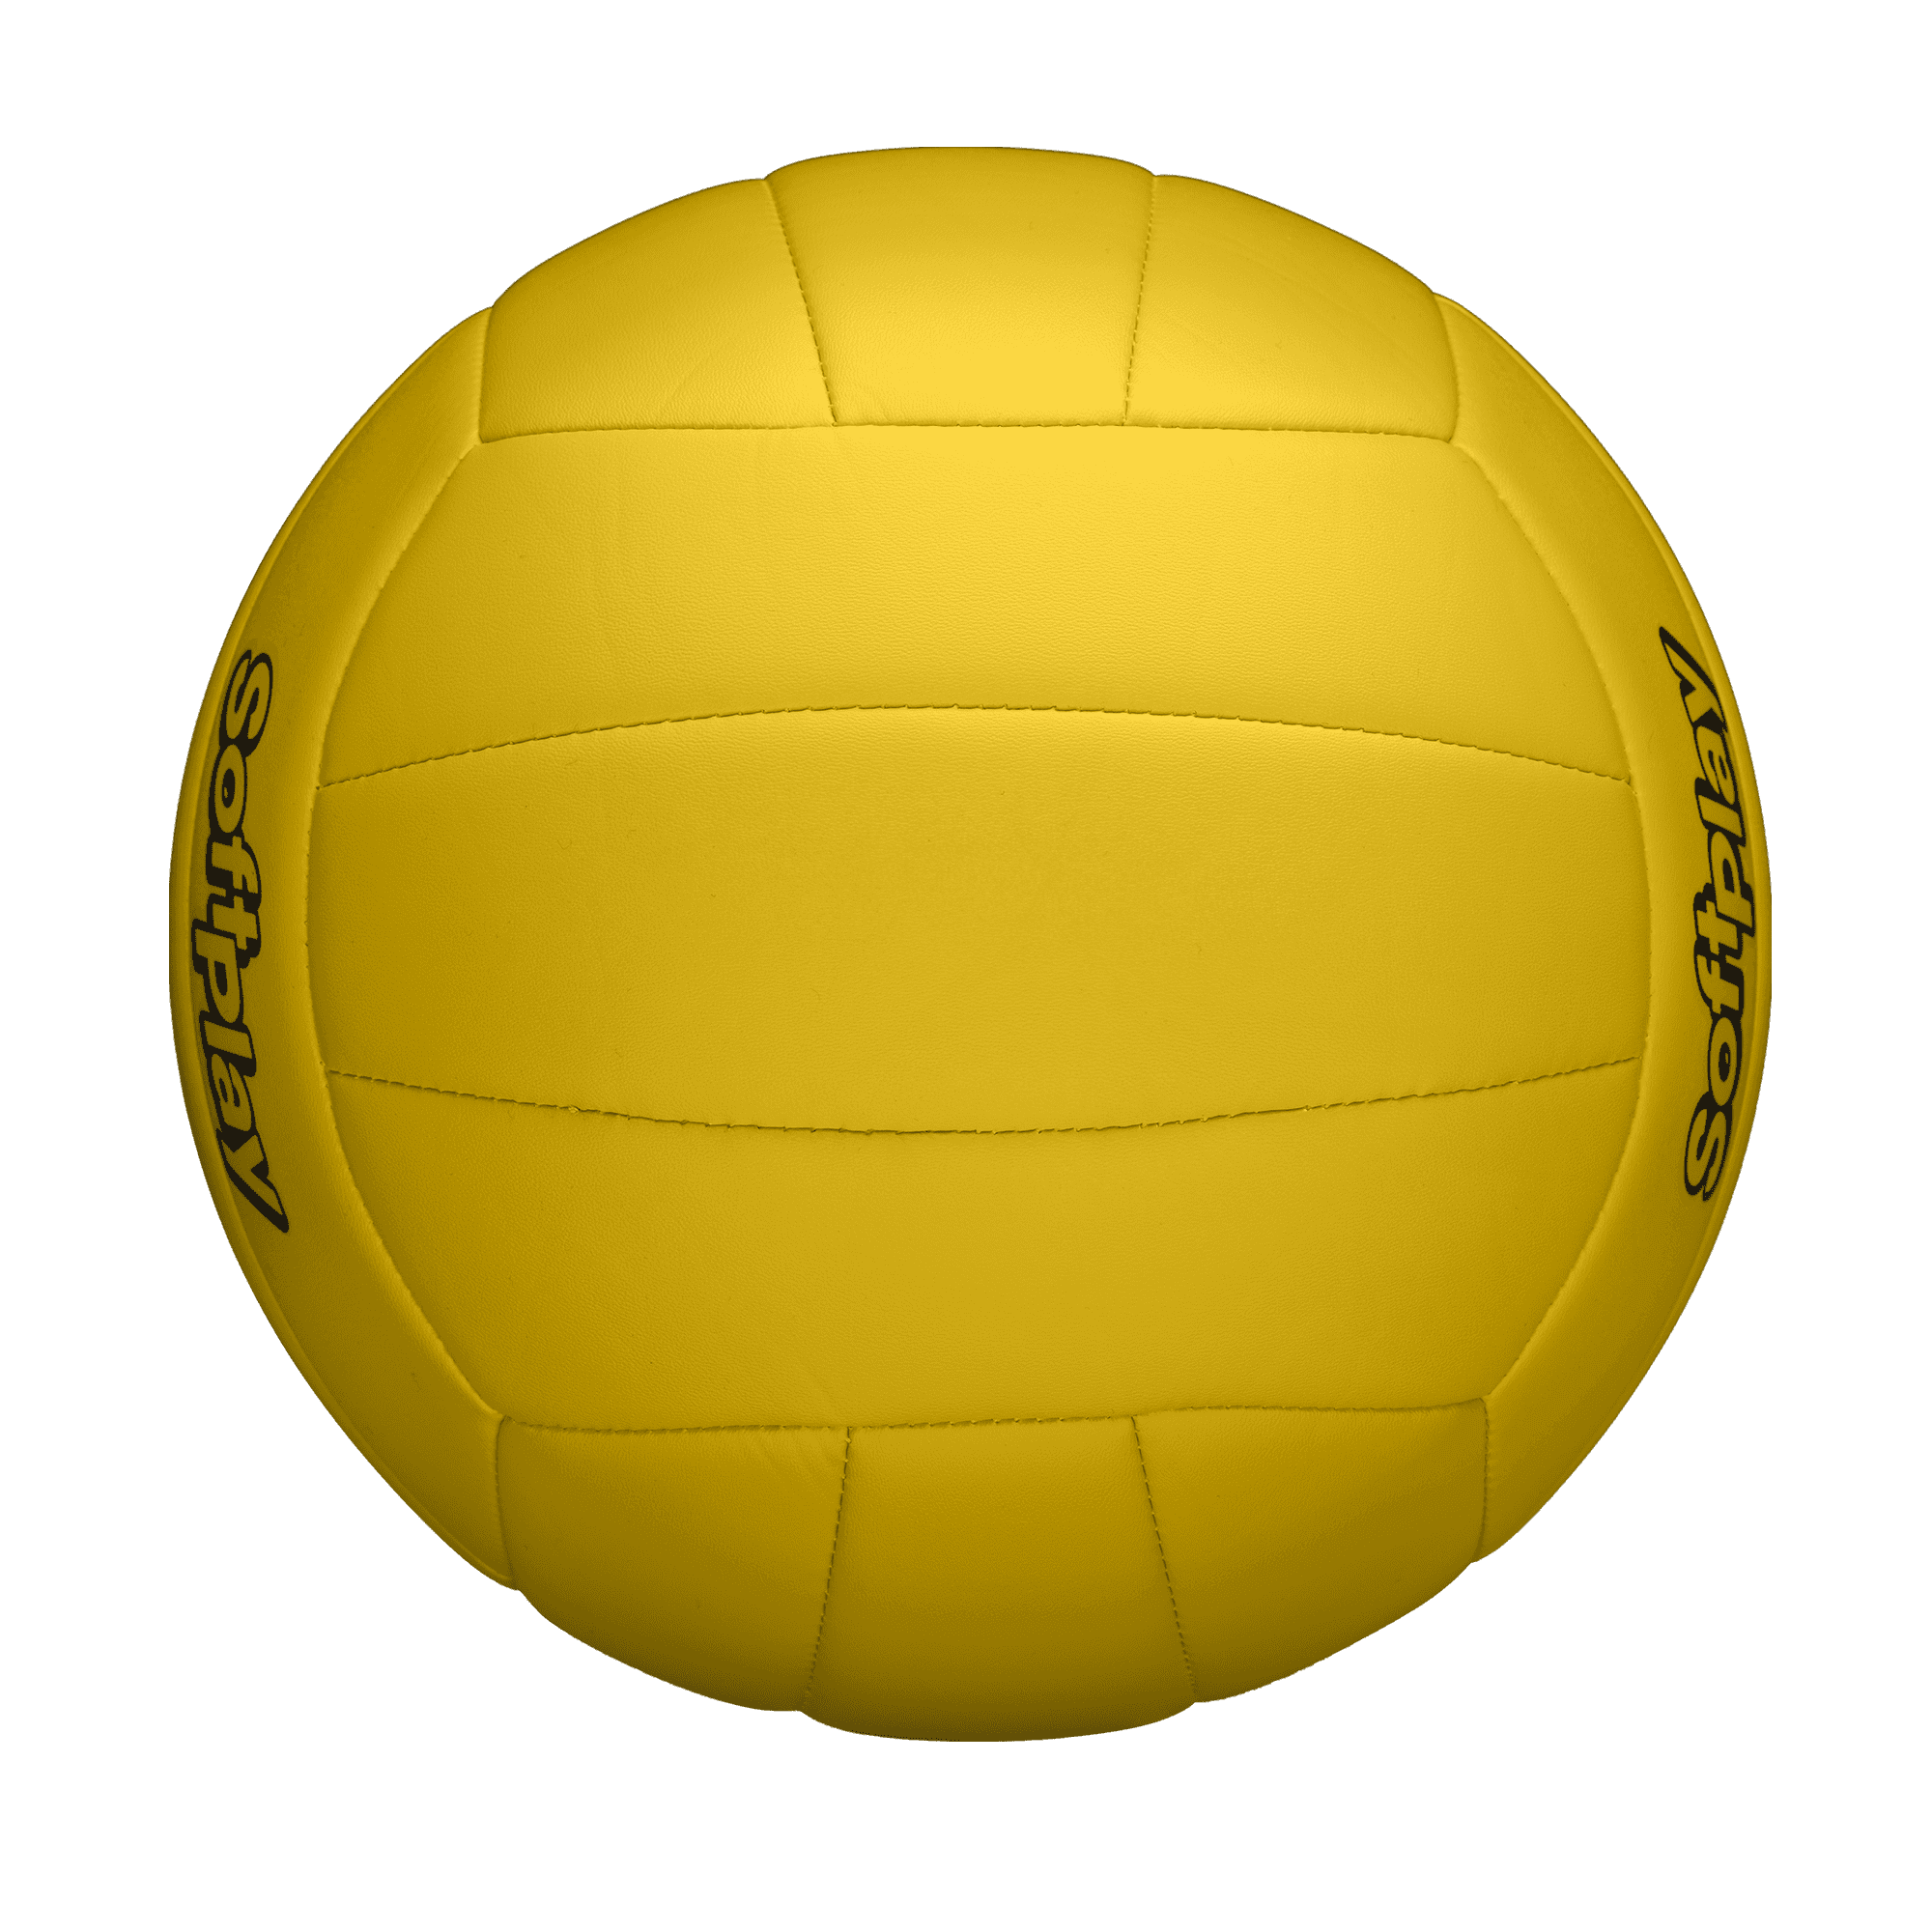 Pelota De Vóley/voleibol Wilson Avp Soft Play Tamaño Oficial